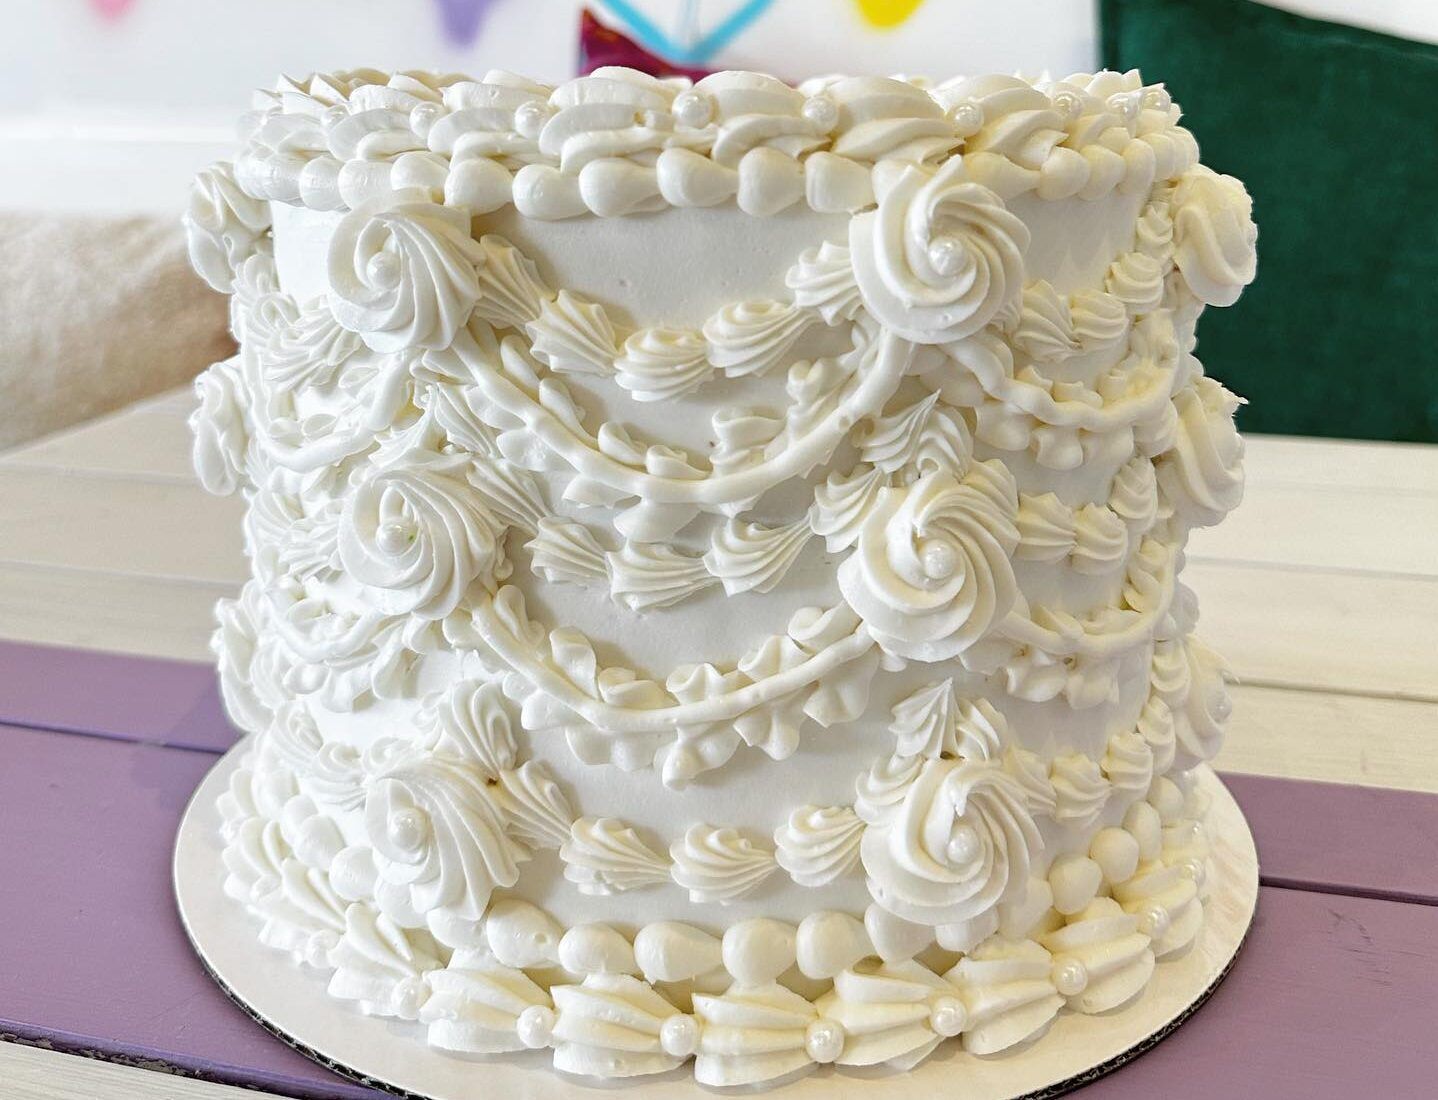 Hot Air Balloon Wedding Cake - Amazing Cake Ideas